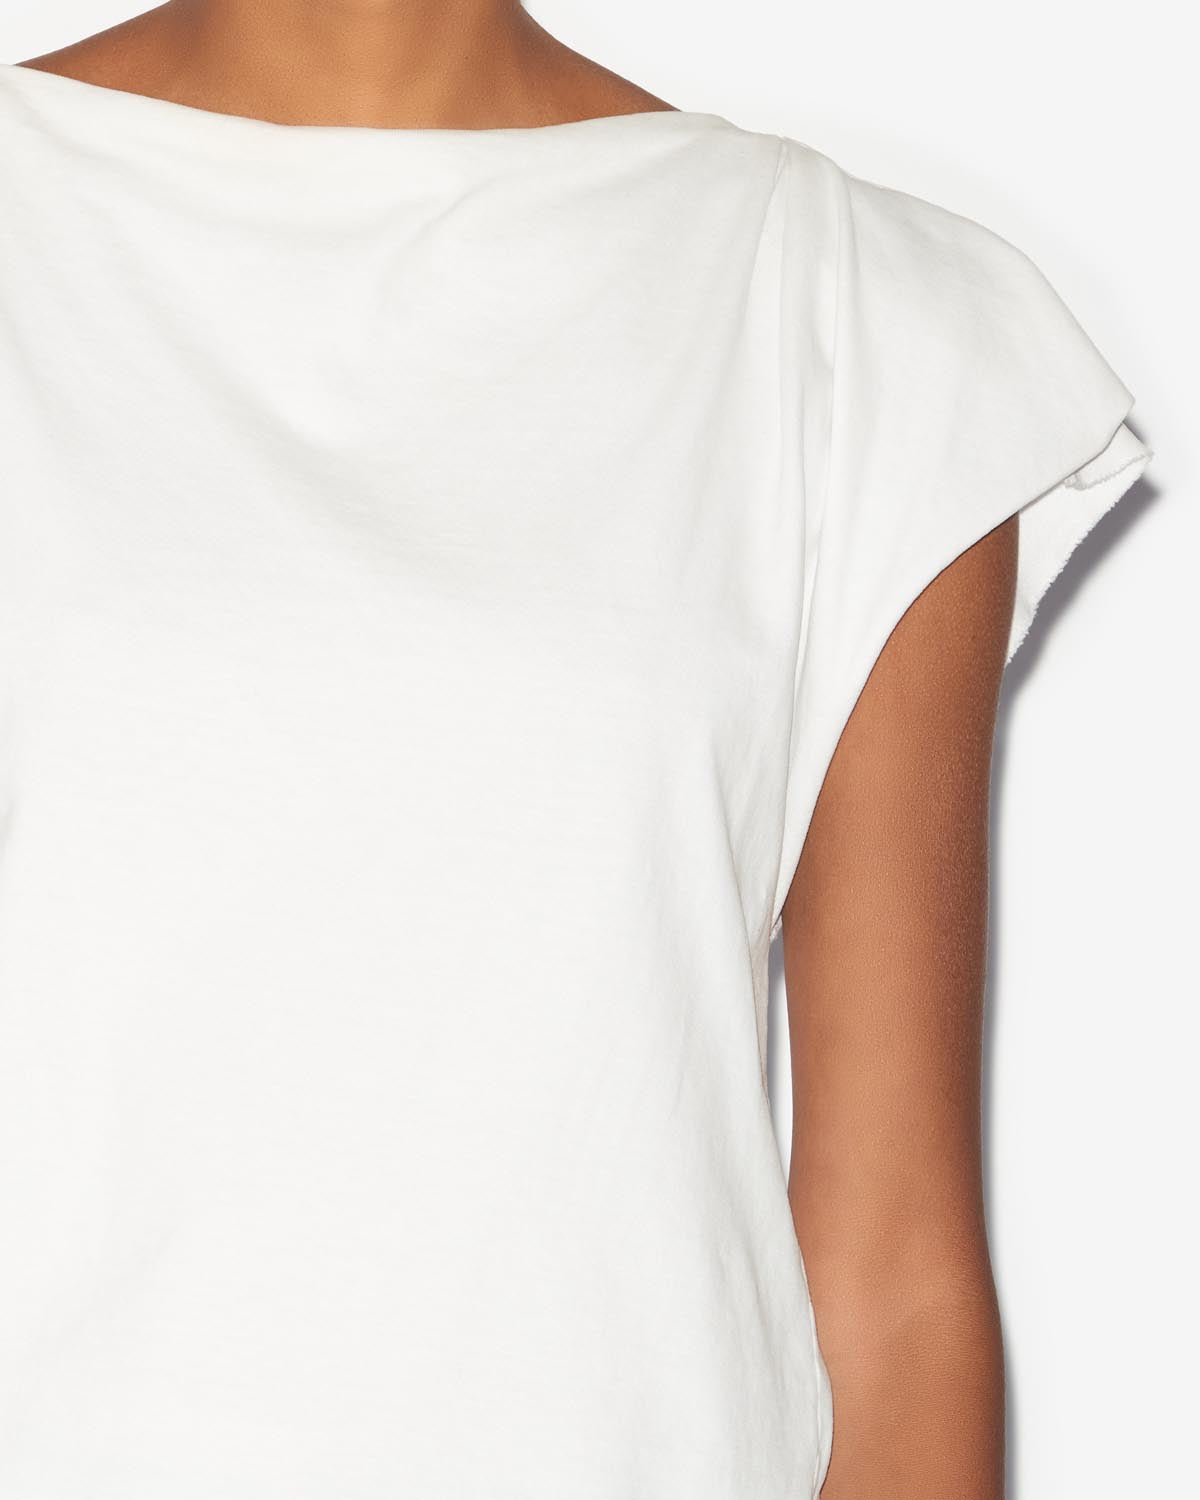 Sebani ティーシャツ Woman 白 2